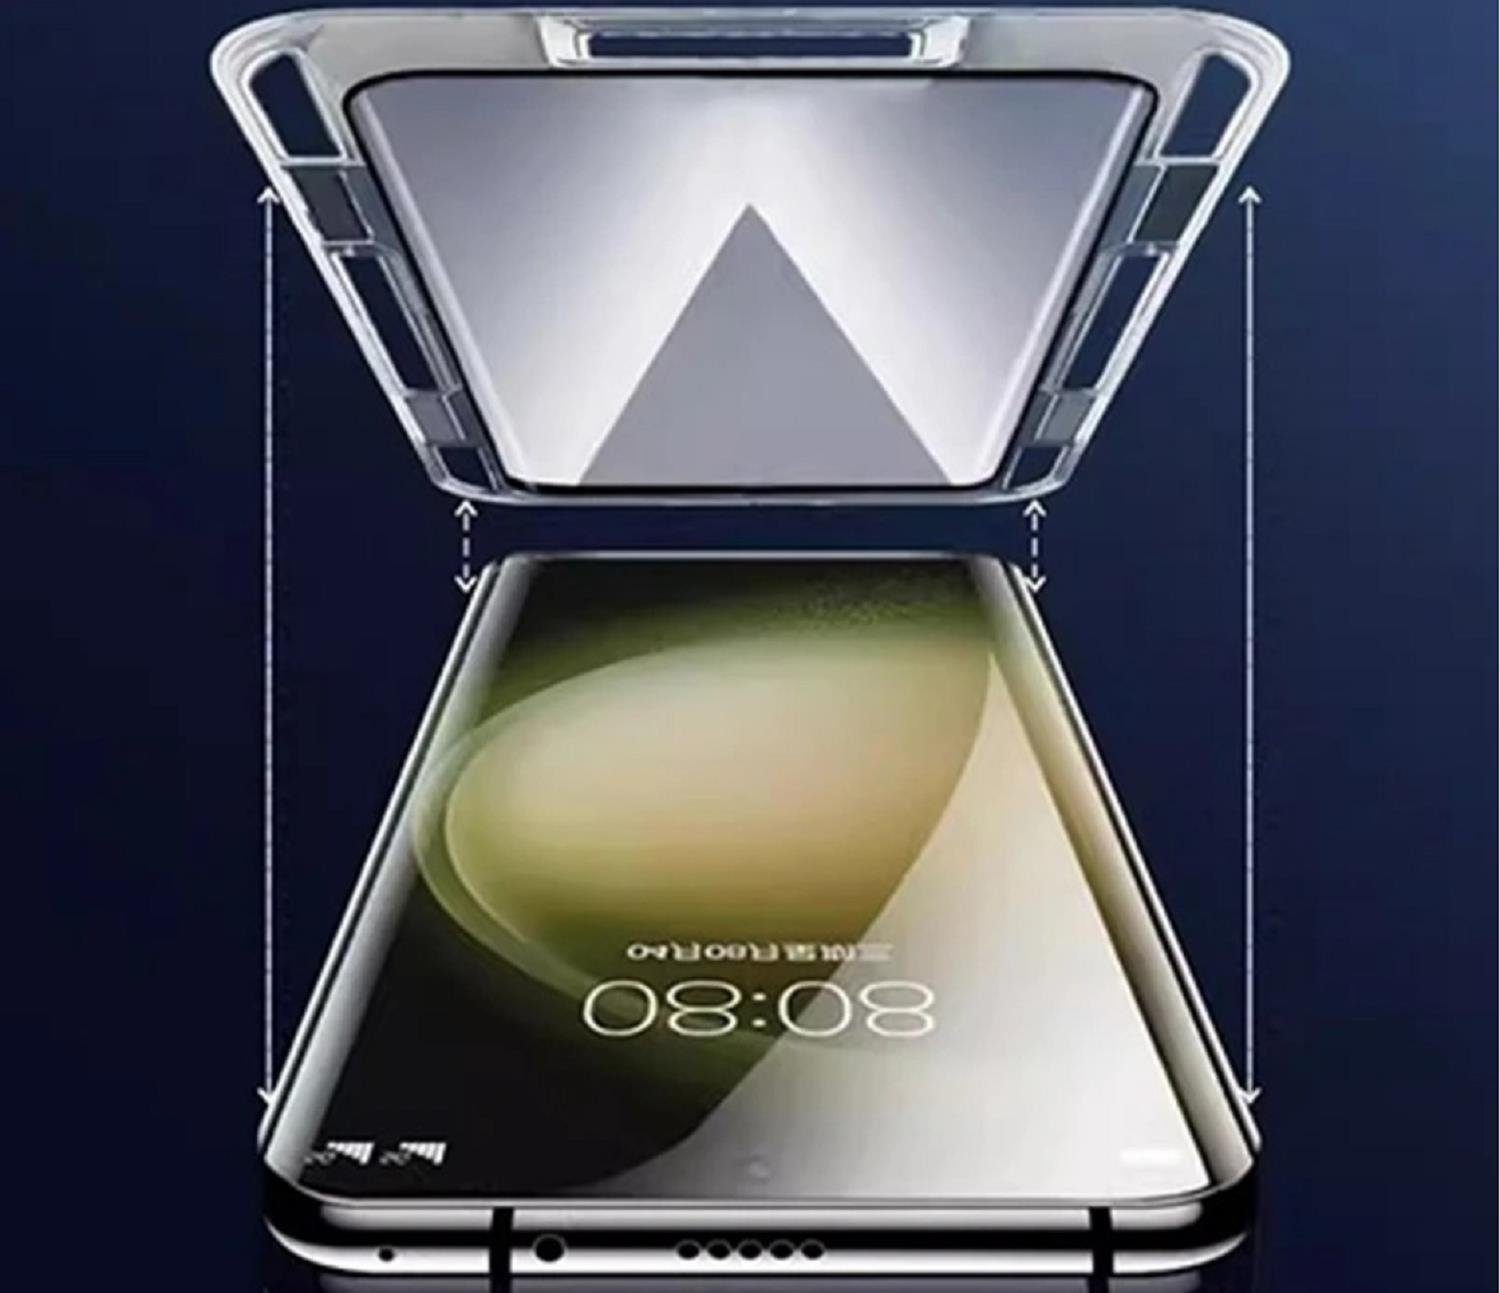 1x 9H Panzerglas für Samsung Galaxy S22 Ultra FULL CURVED ANTI-SPY Pr,  14,90 €